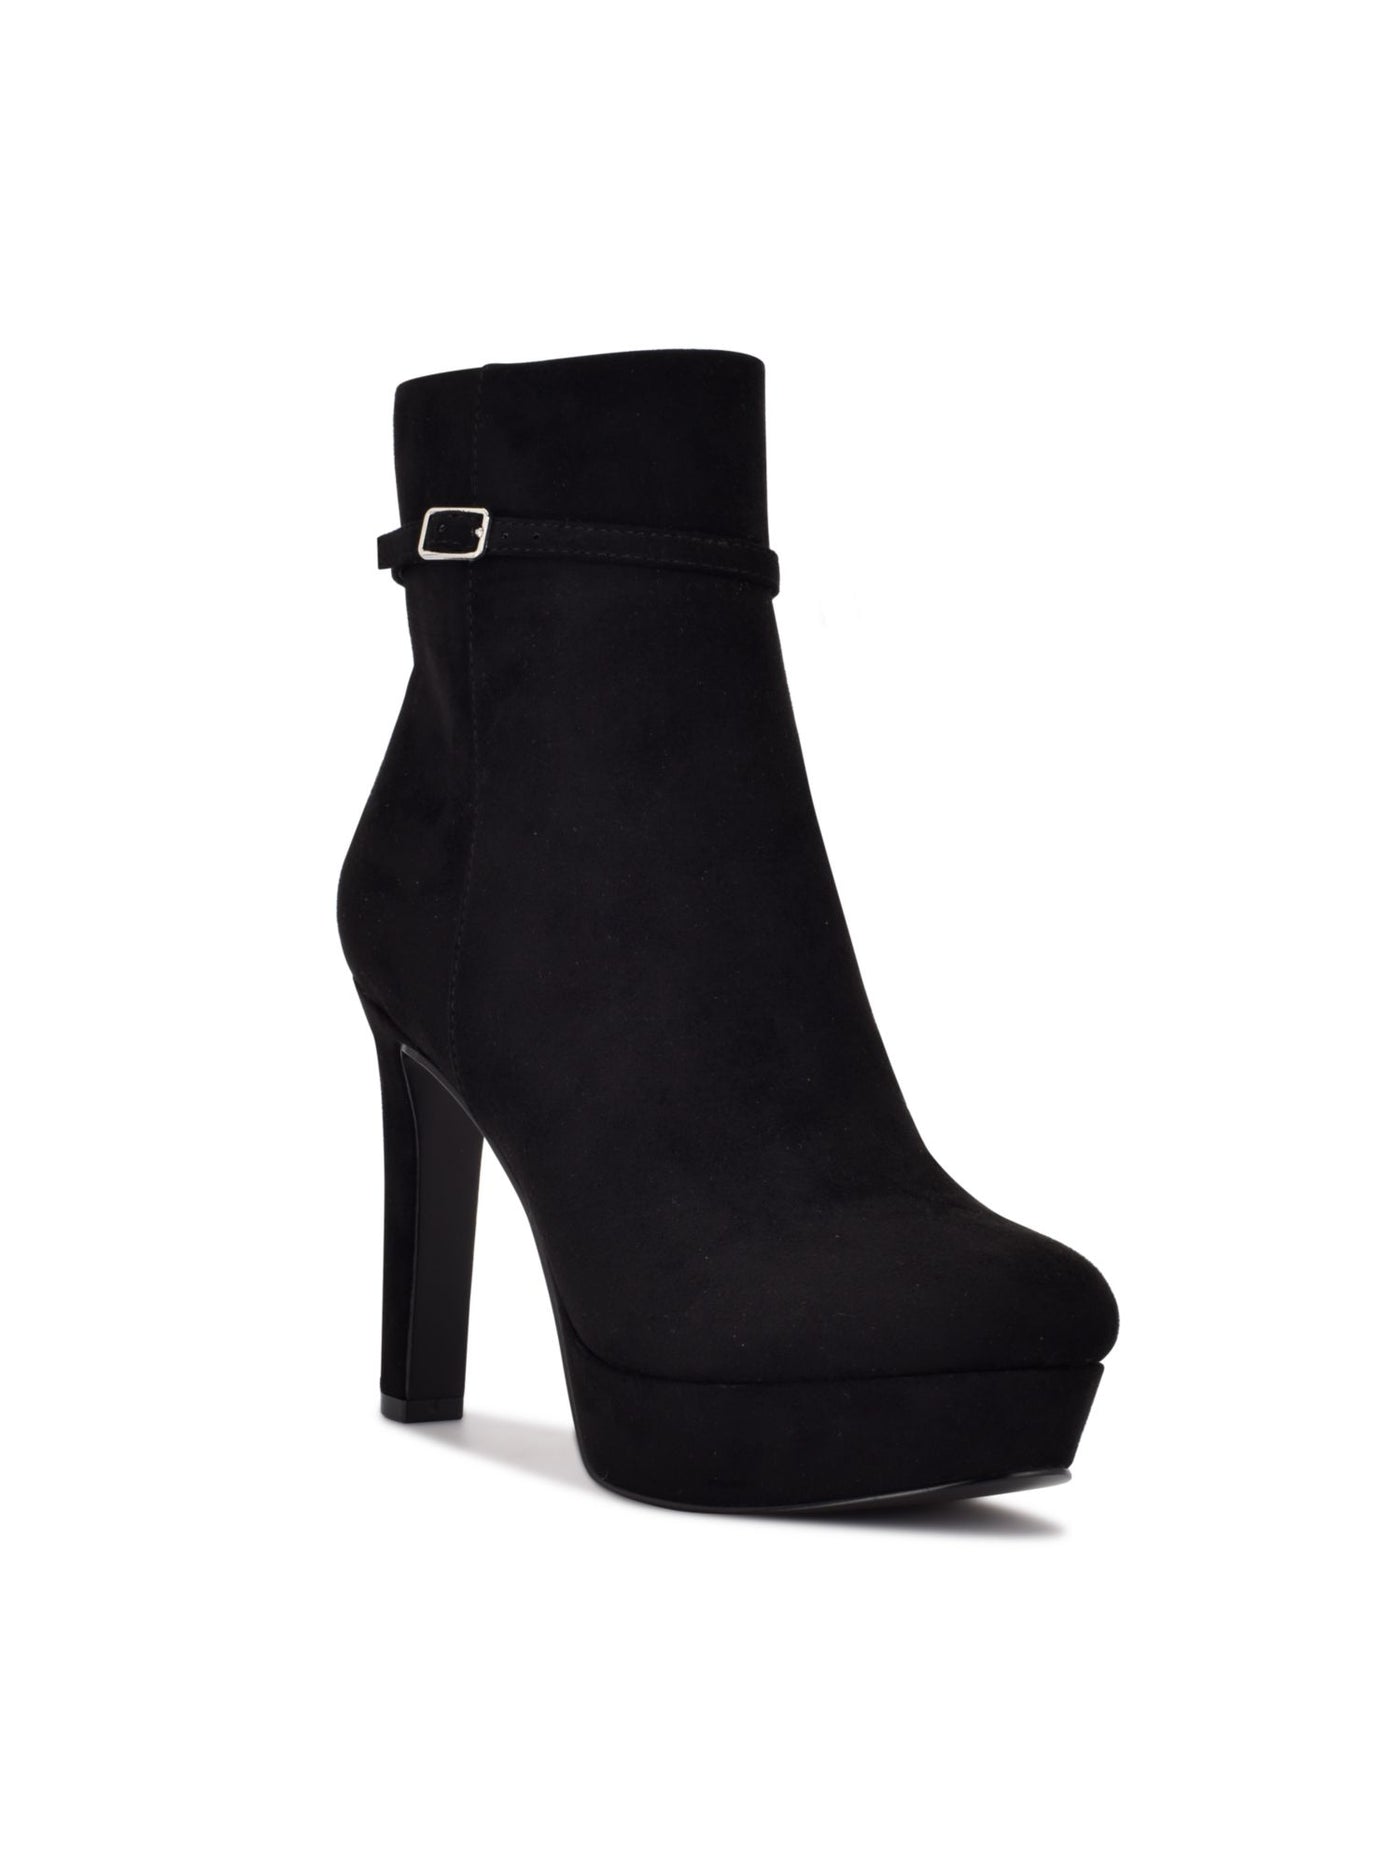 NINE WEST Womens Black Gripe Almond Toe Stiletto Zip-Up Dress Boots Shoes 9.5 M